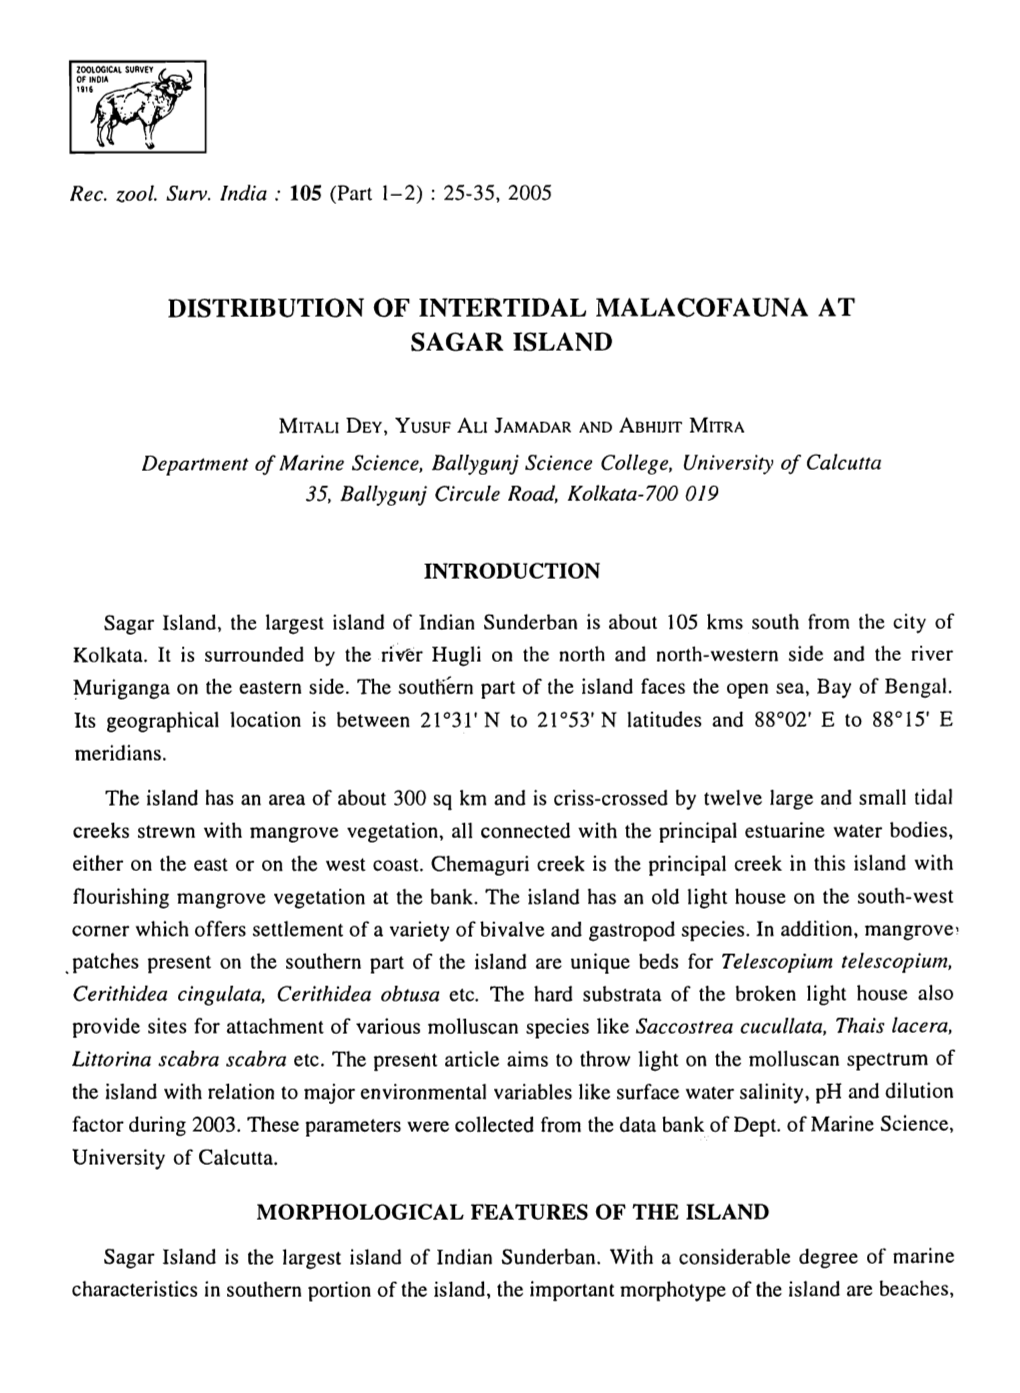 Distribution of Intertidal Malacofauna at Sagar Island